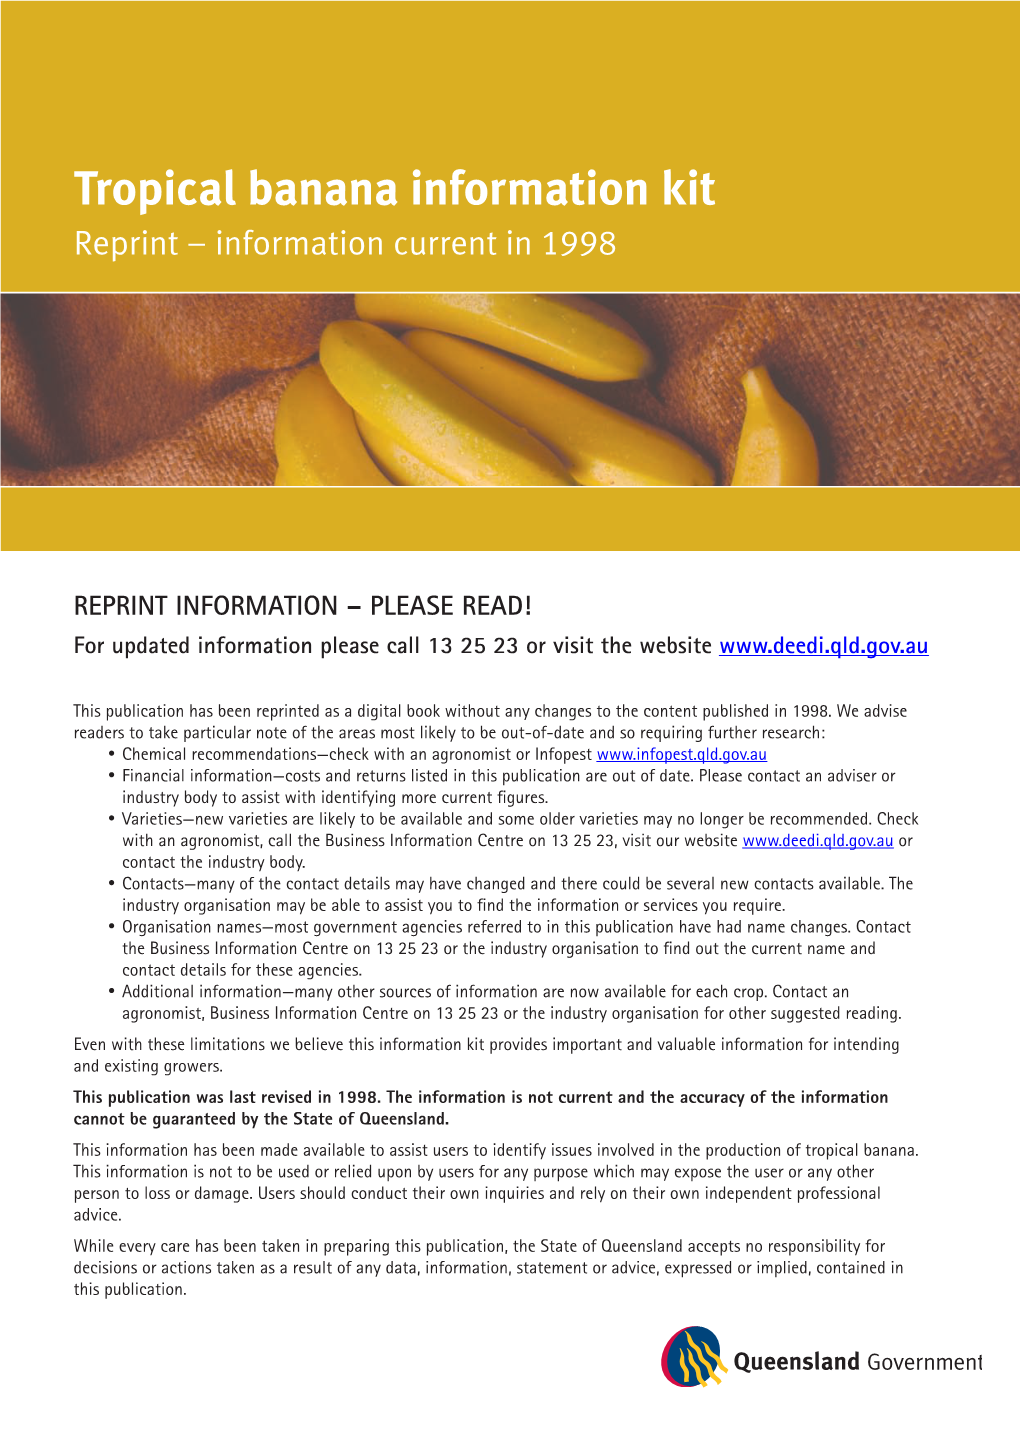 Tropical Banana Information Kit (1998) Reprint